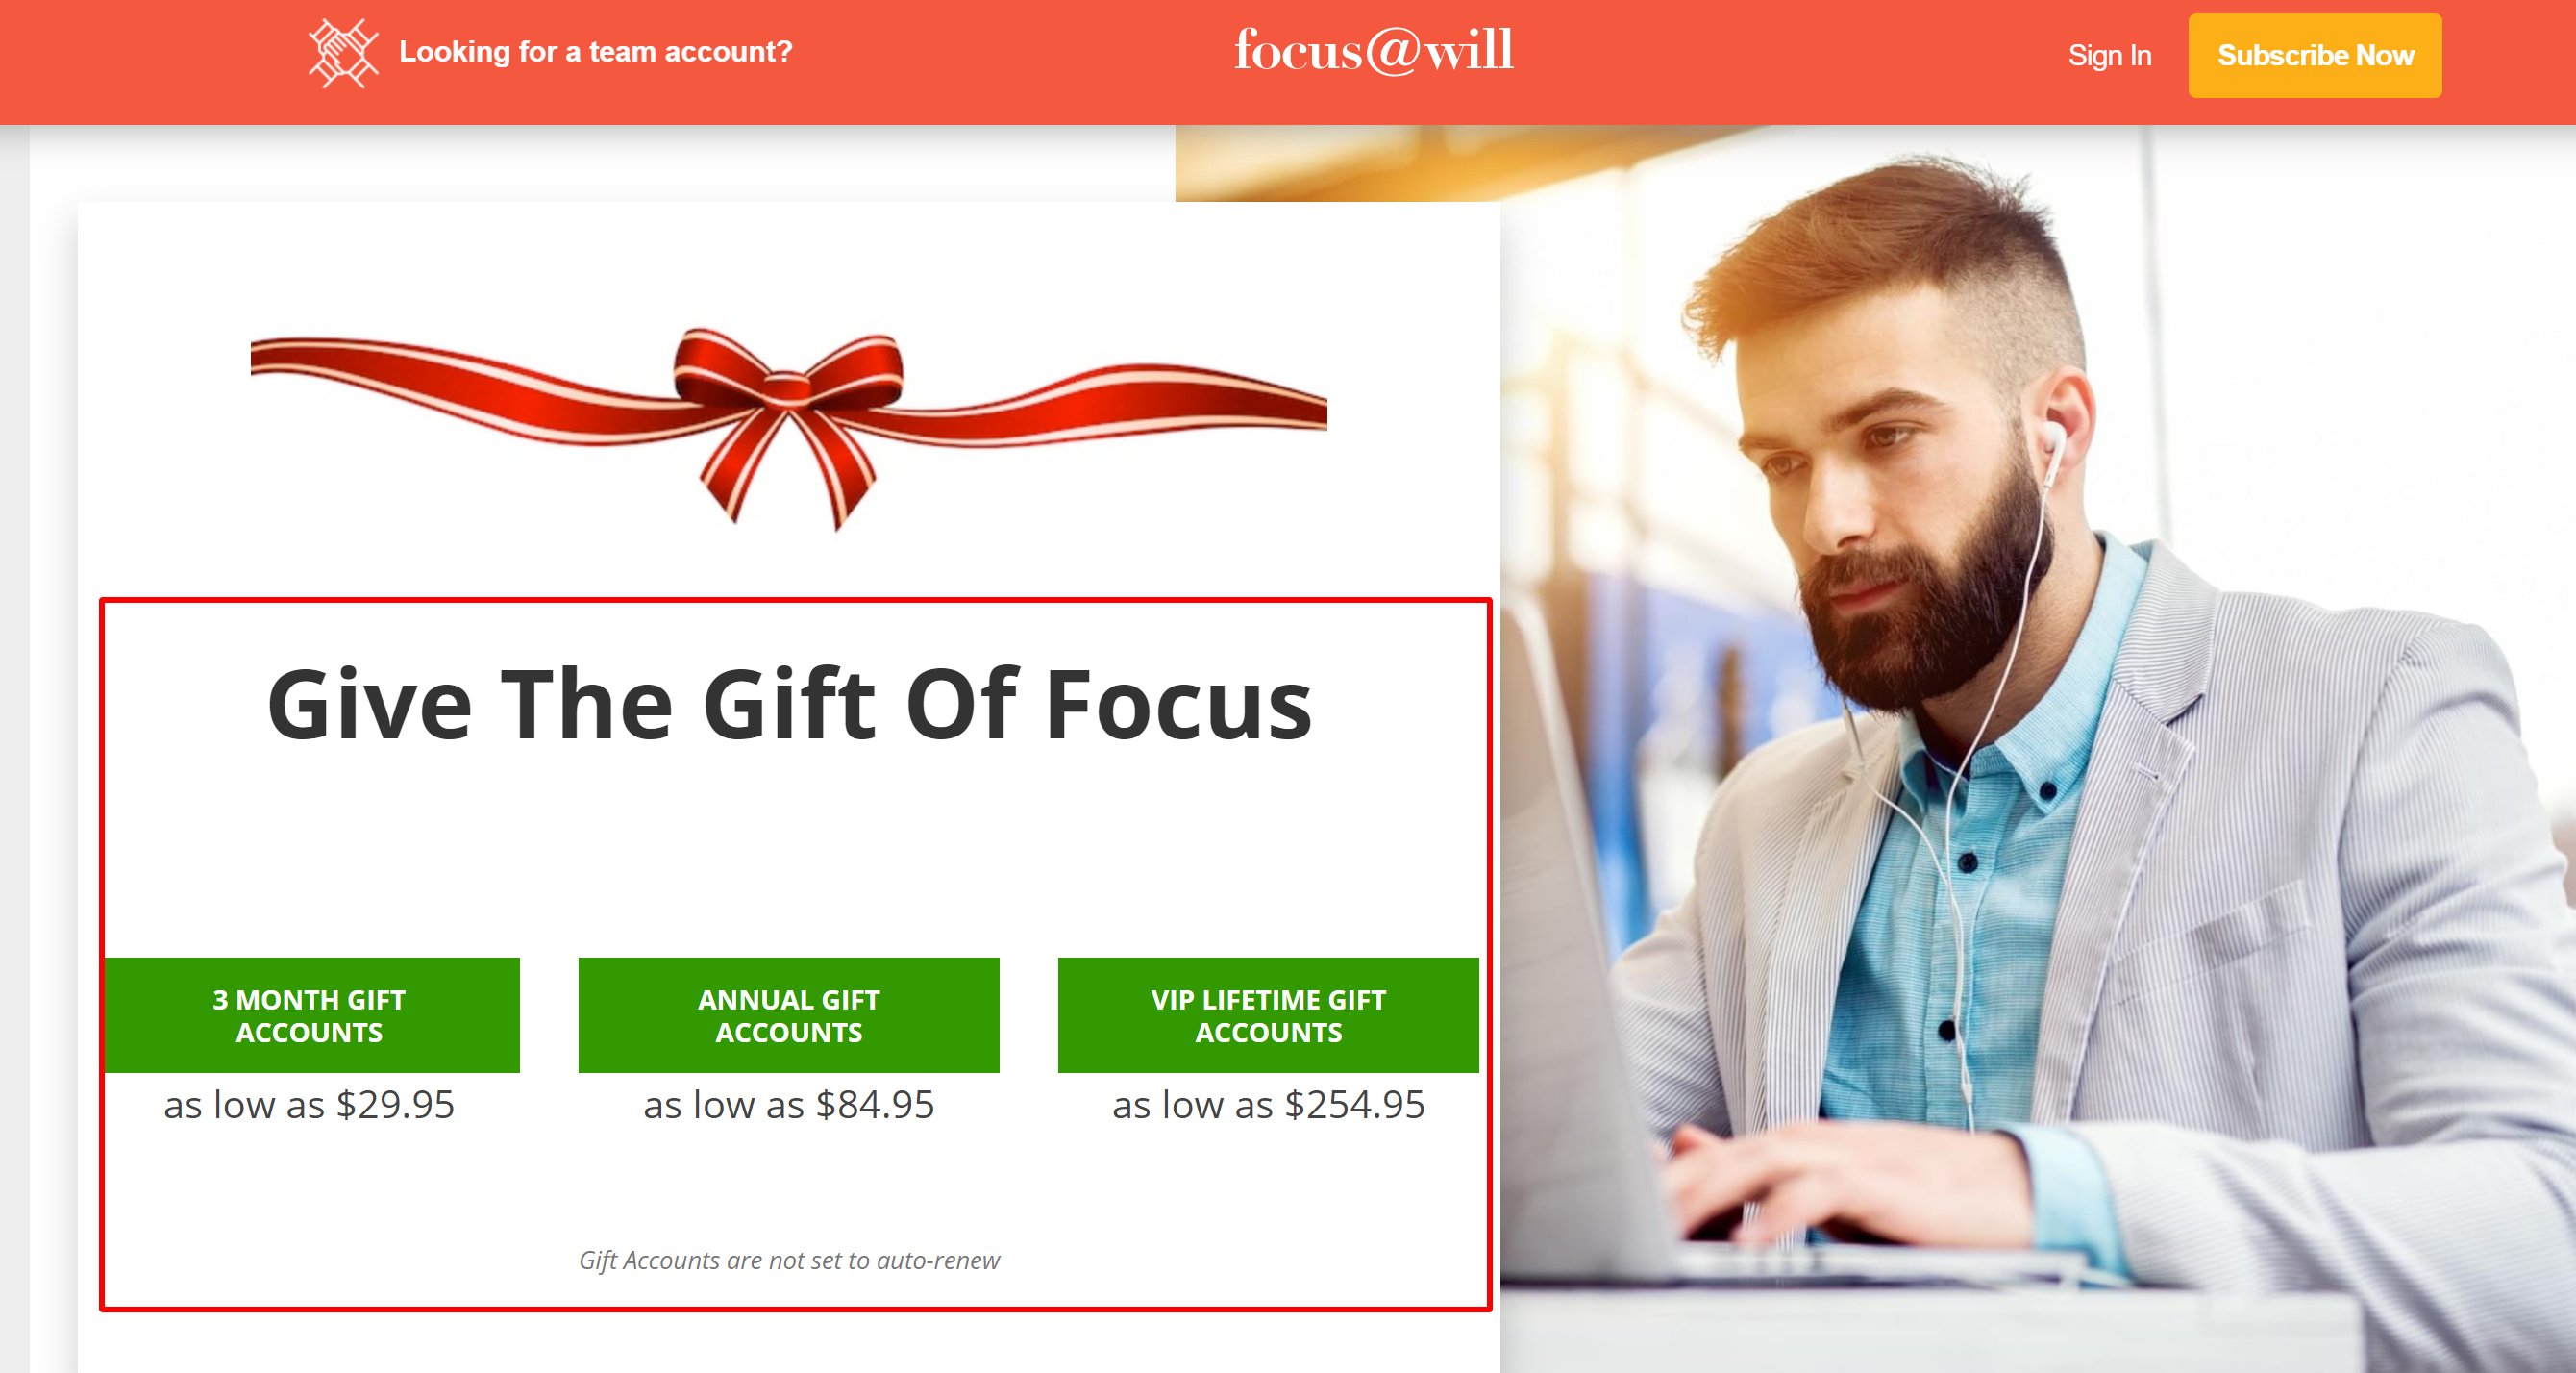 focusatwill discount coupon lifetime